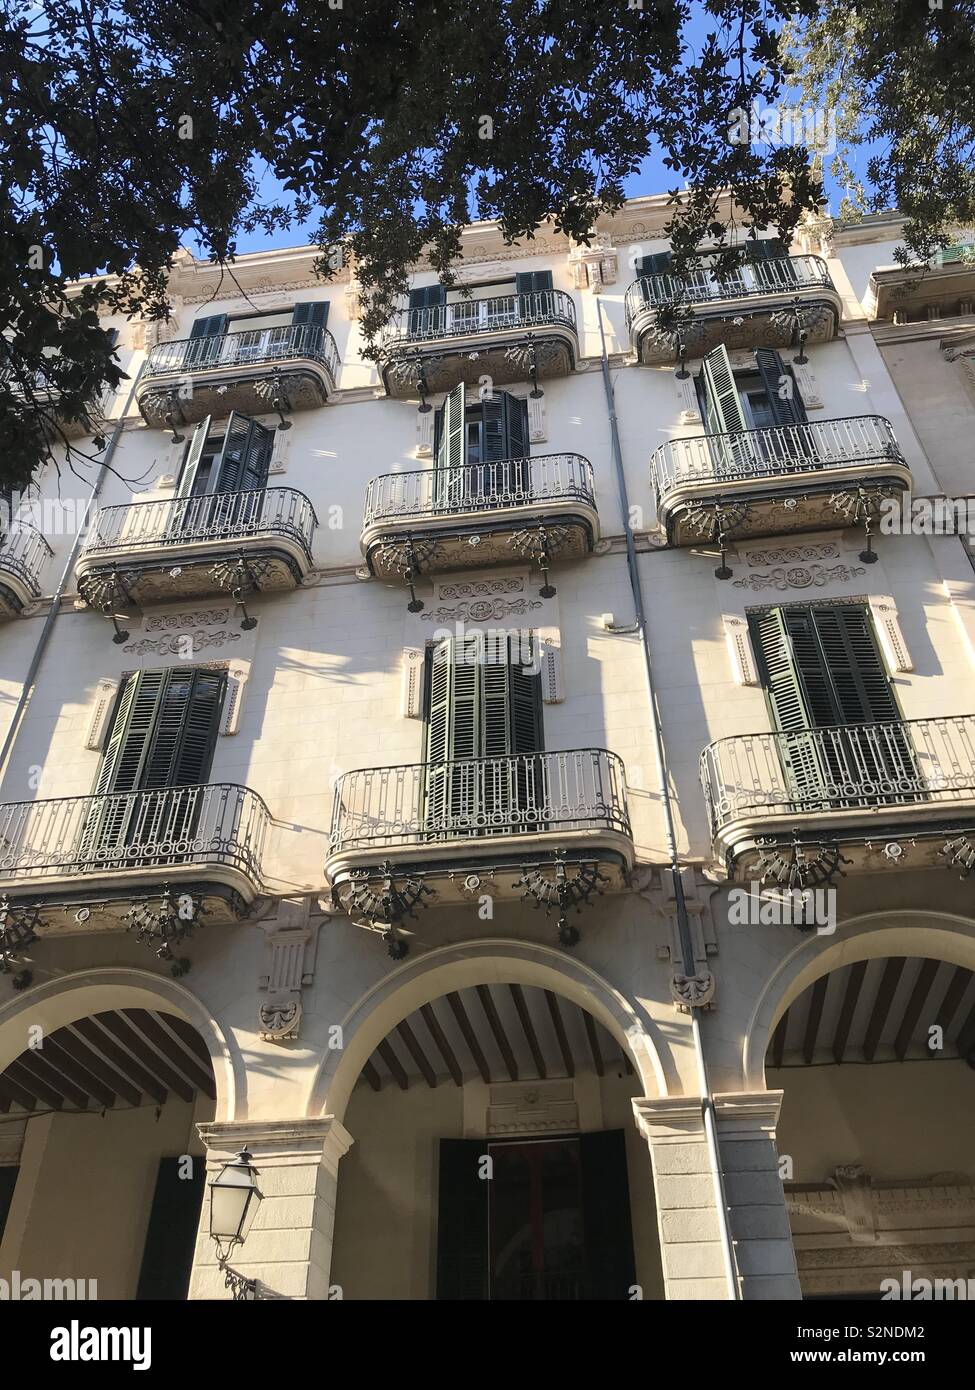 Häuserfassade mit Spanischen Balkonen in Palma de Mallorca Stock Photo